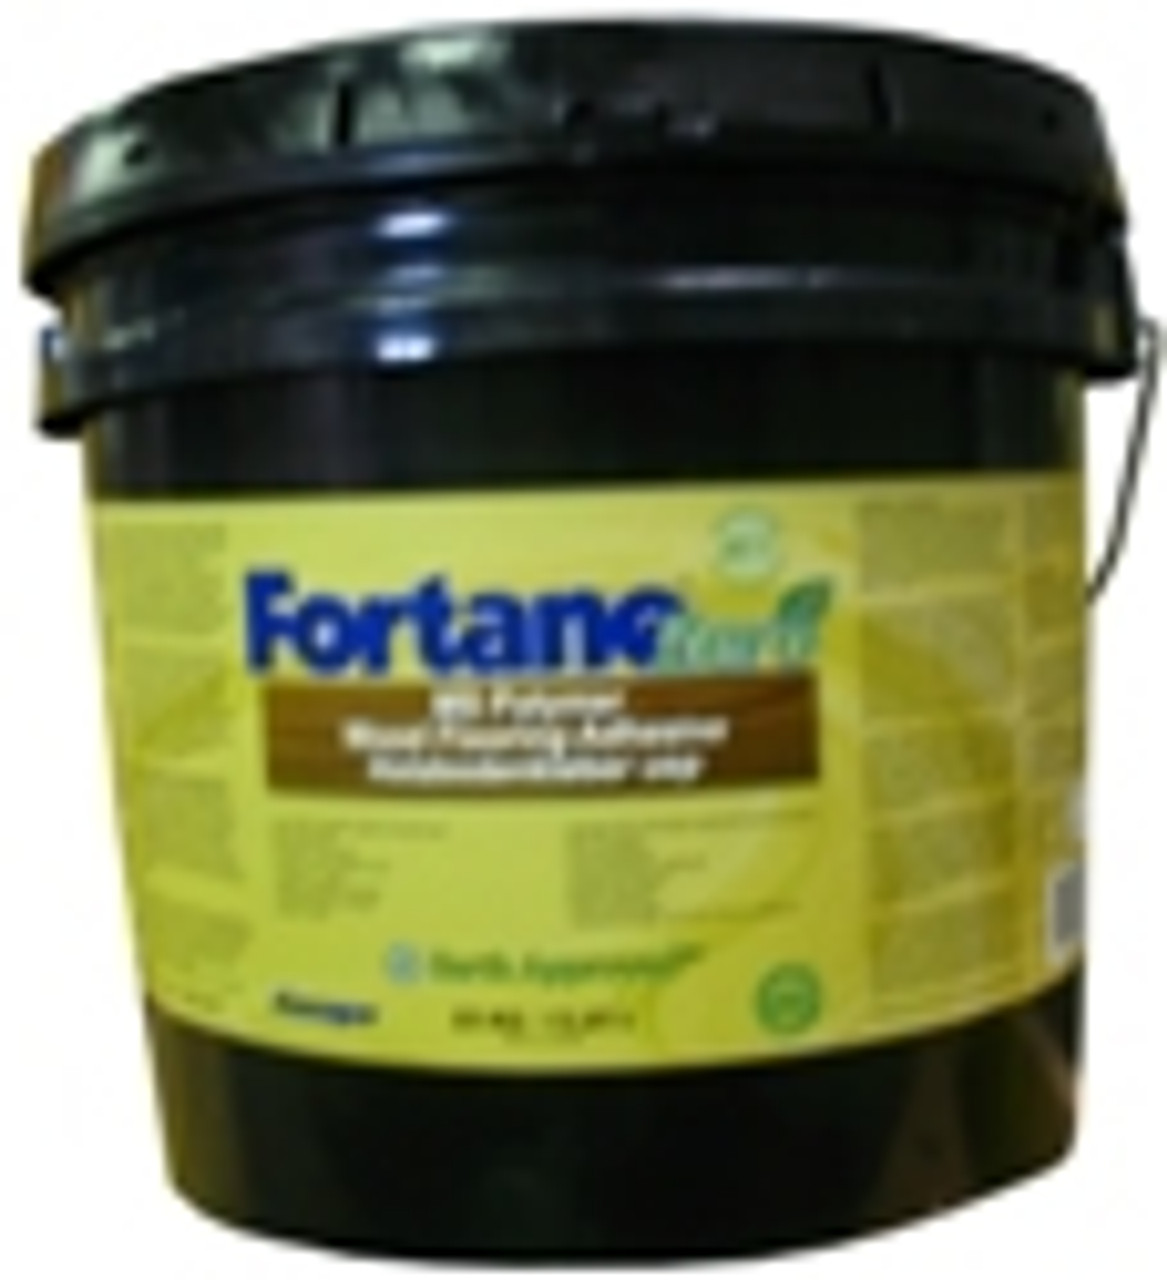 Fortane Zero H2O Control Adhesive